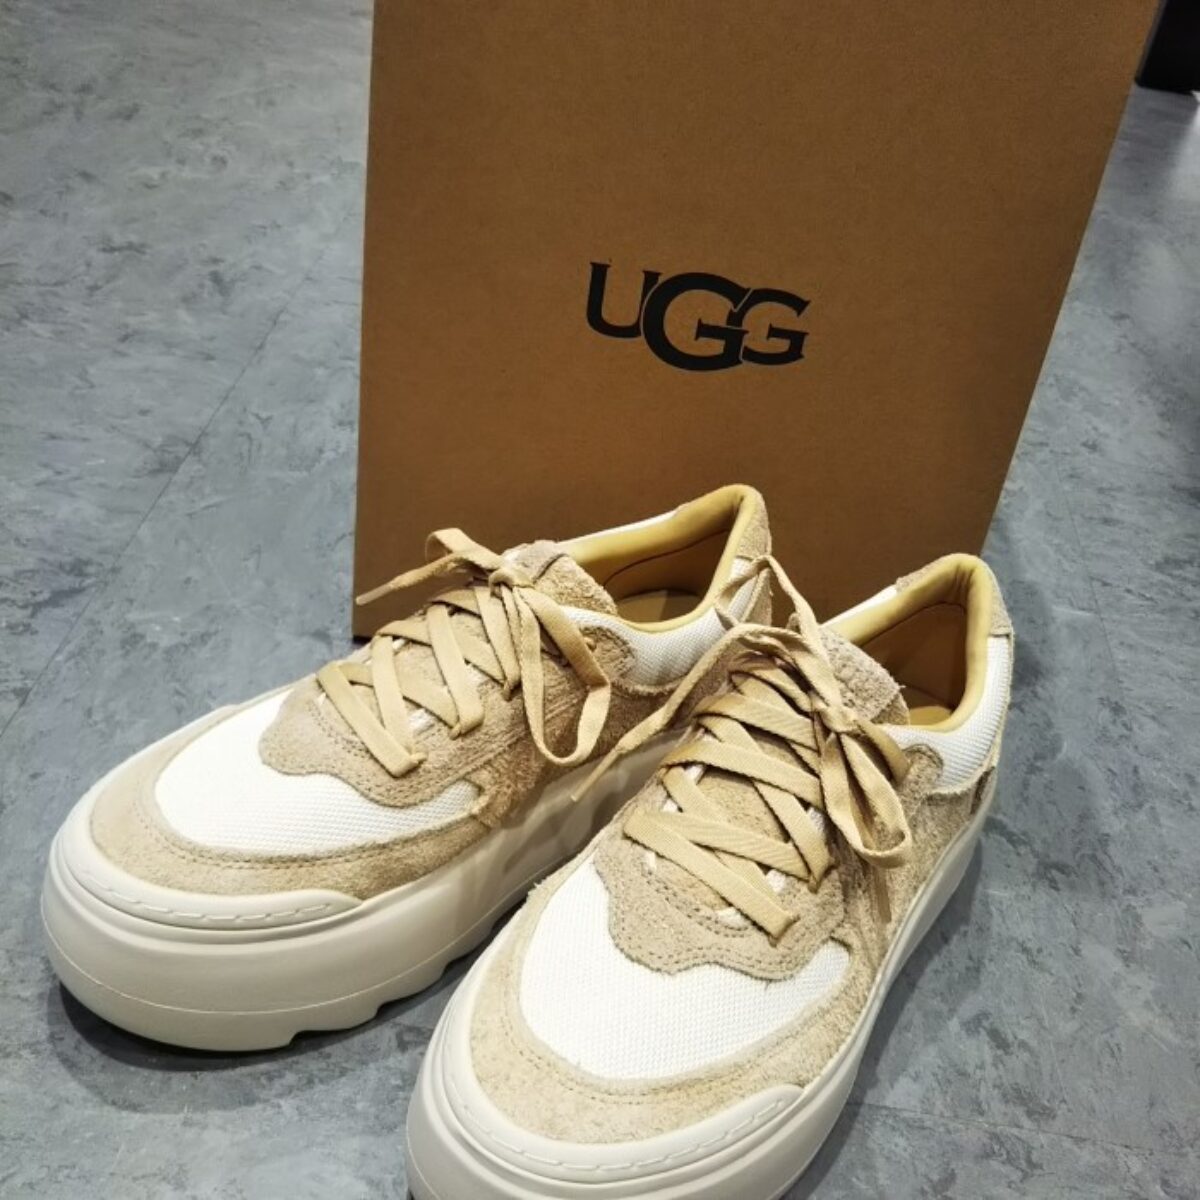 UGG-01